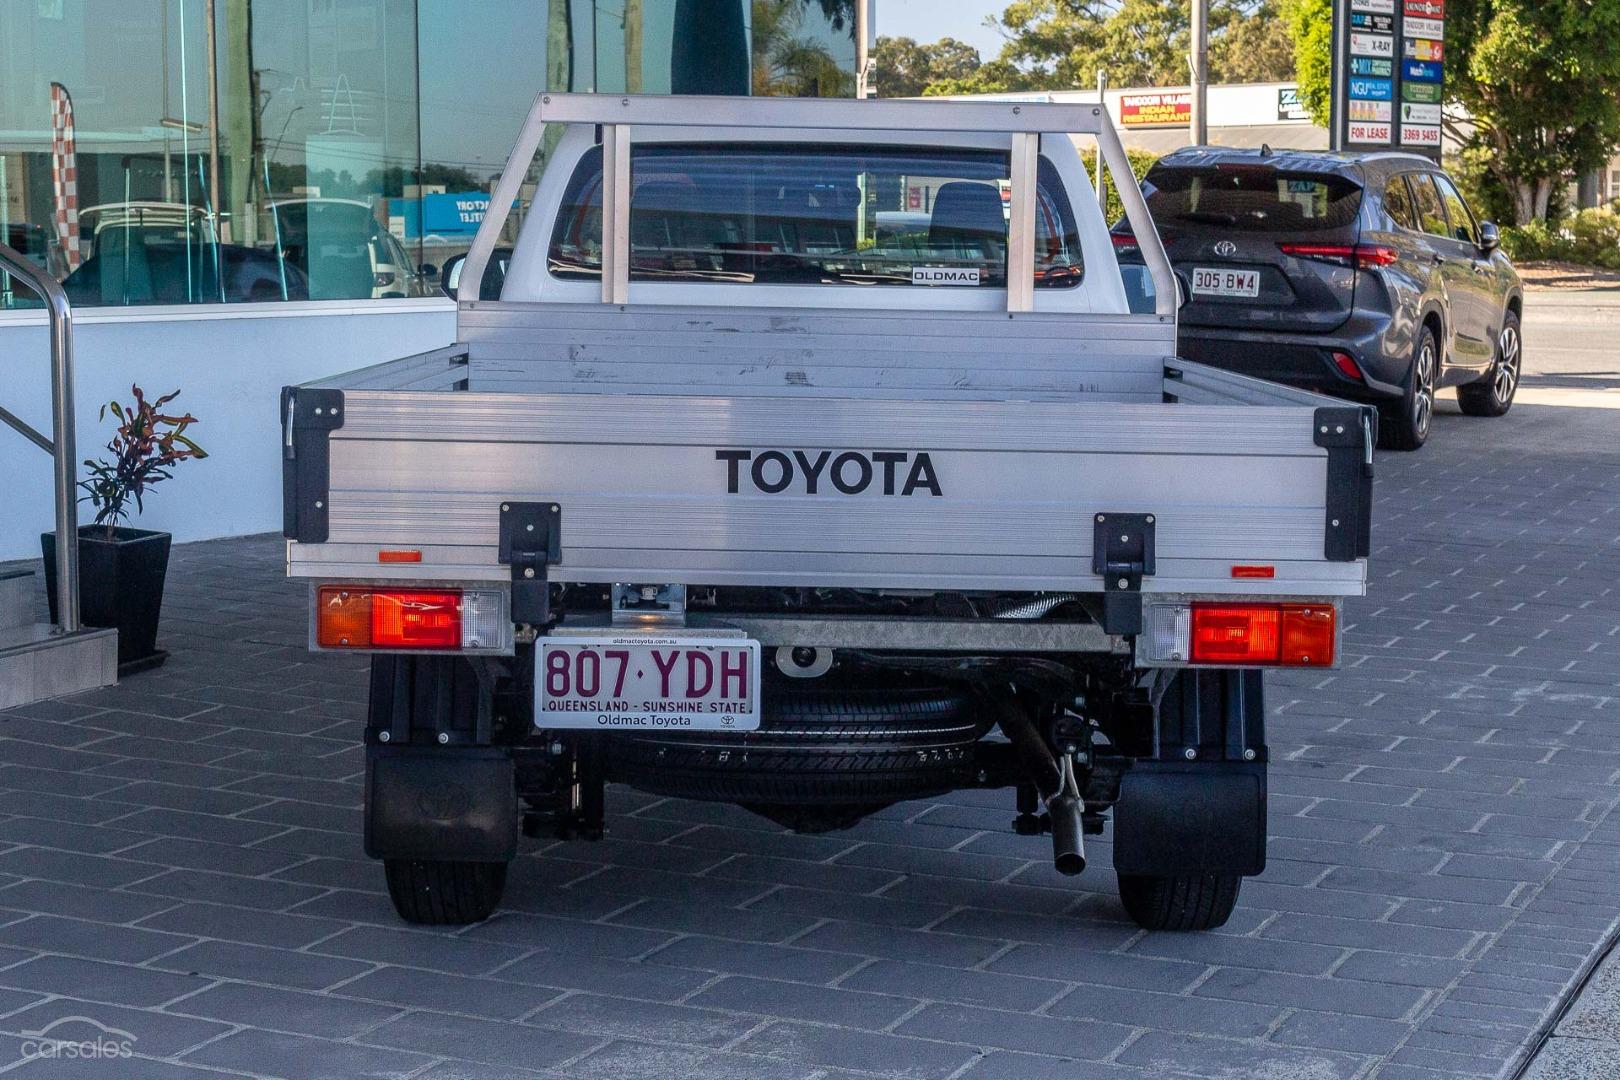 2018 Toyota Hilux Image 7